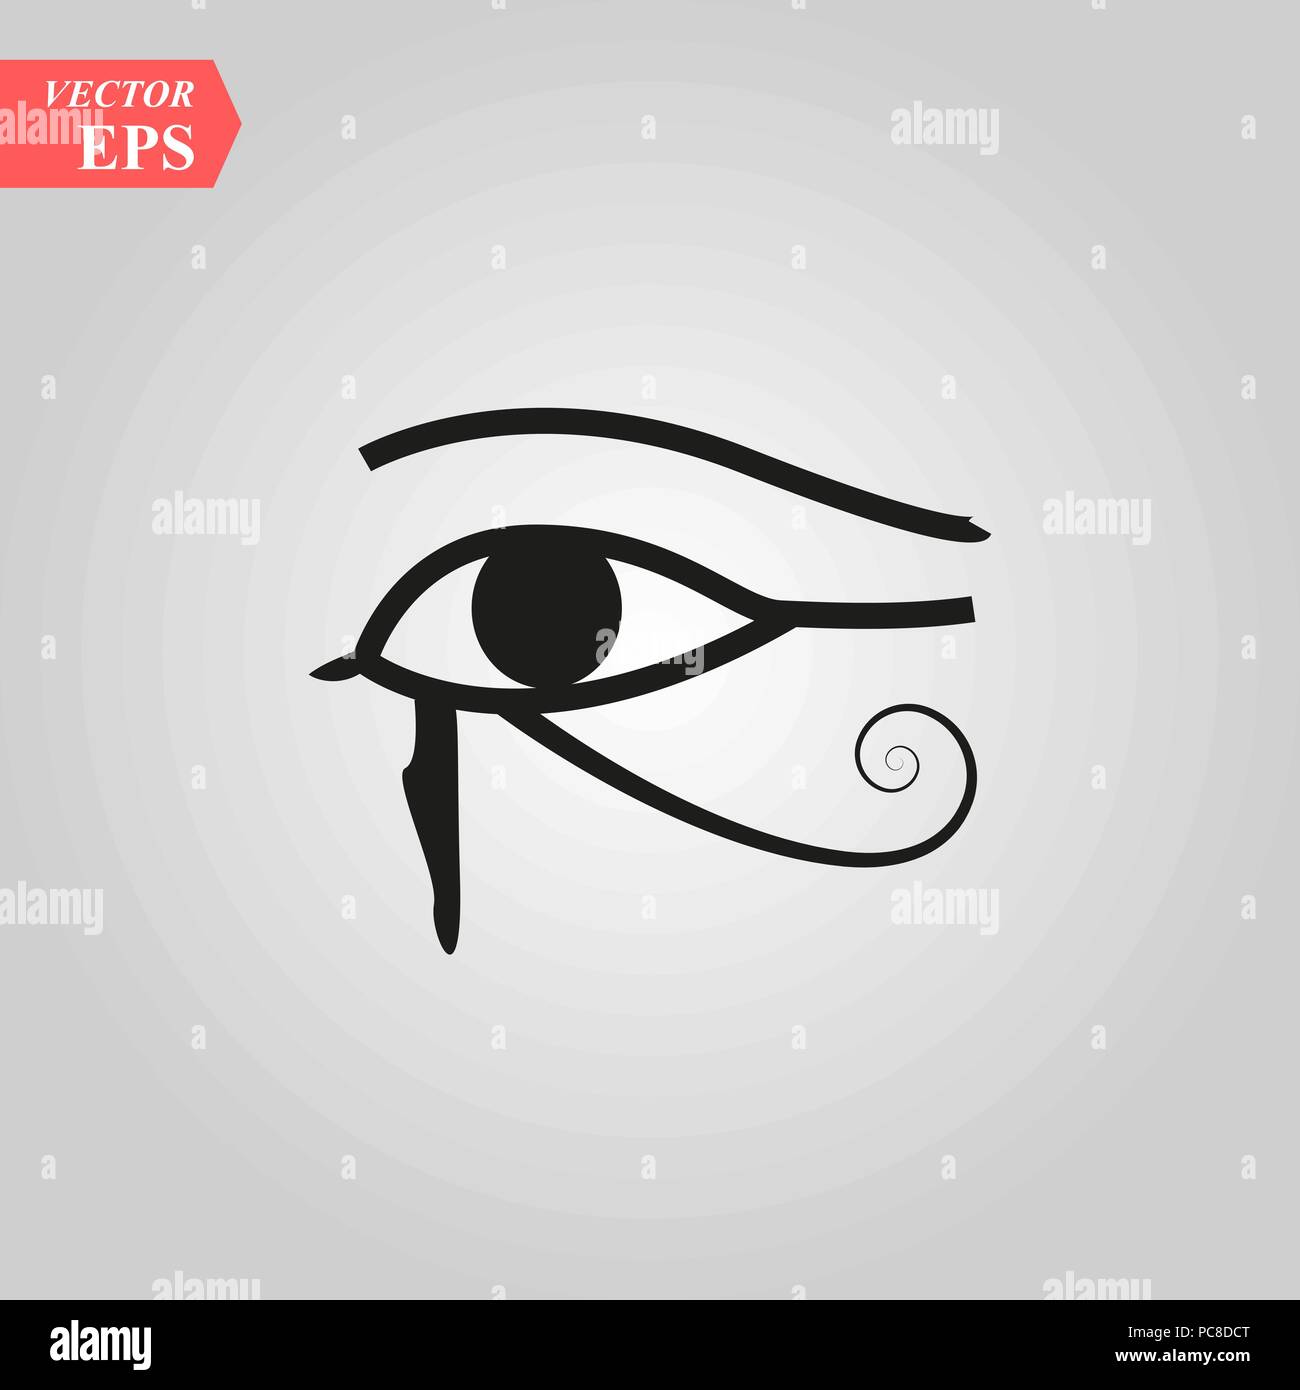 Egyptian Symbols Of Protection